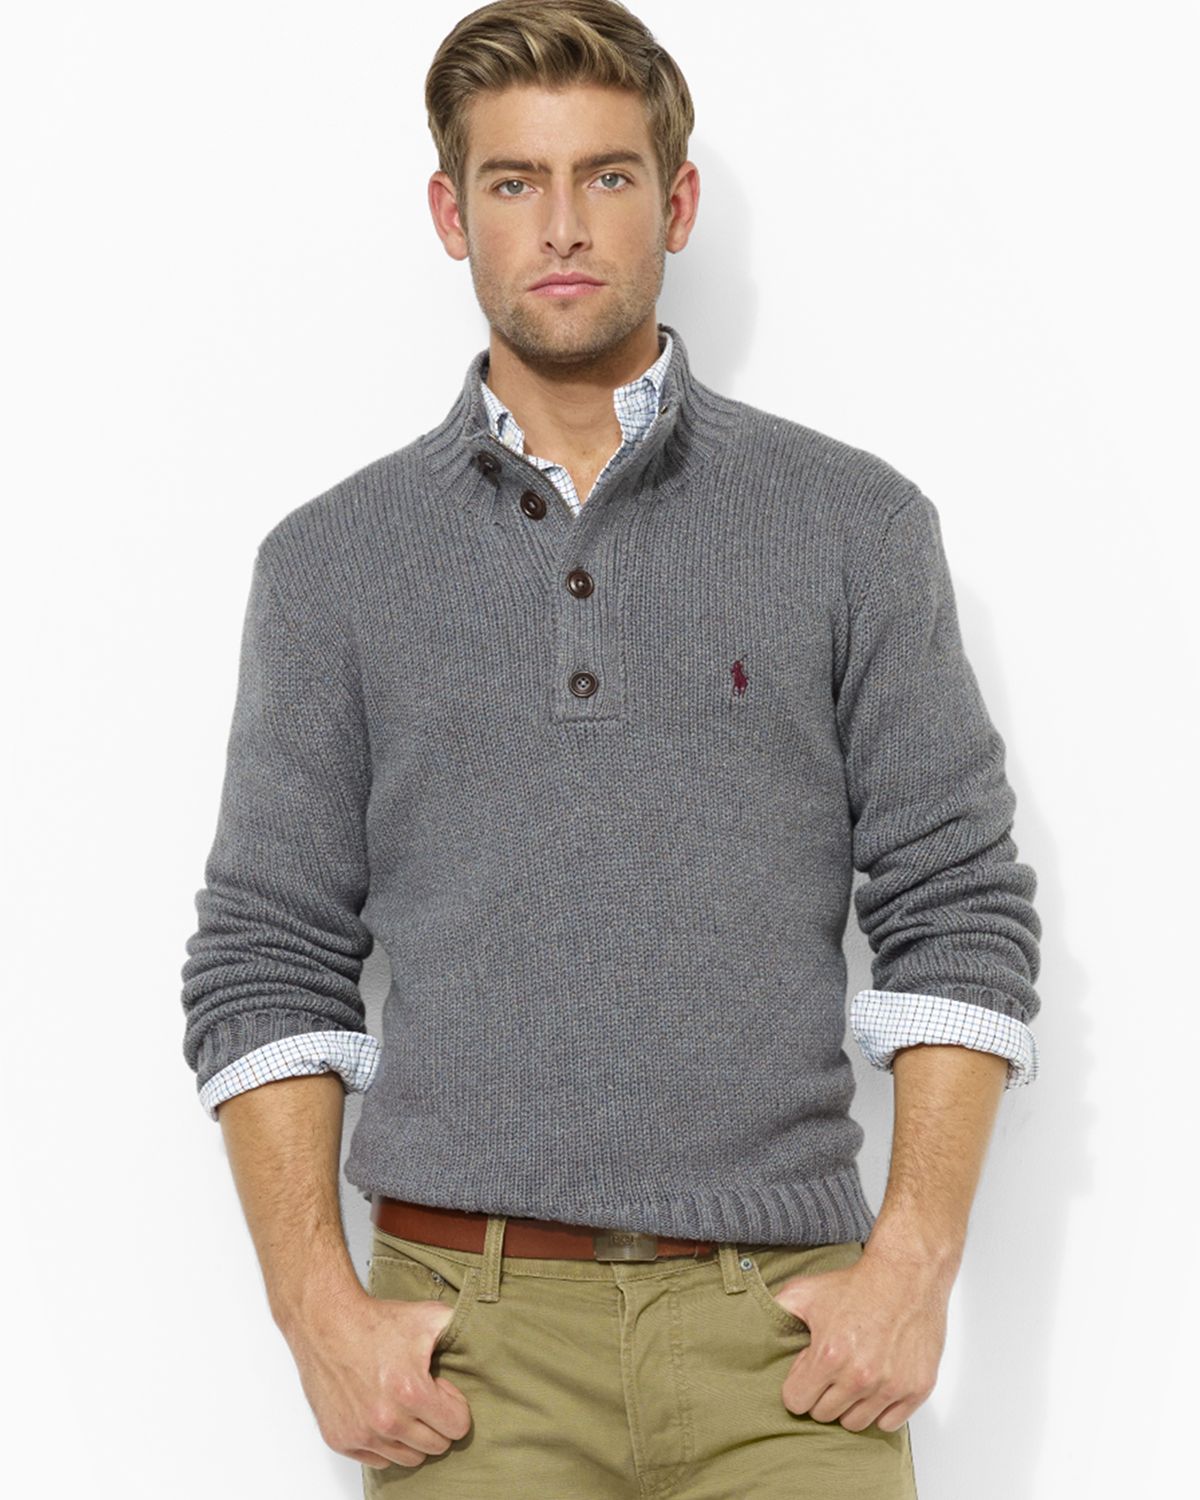 polo button sweater